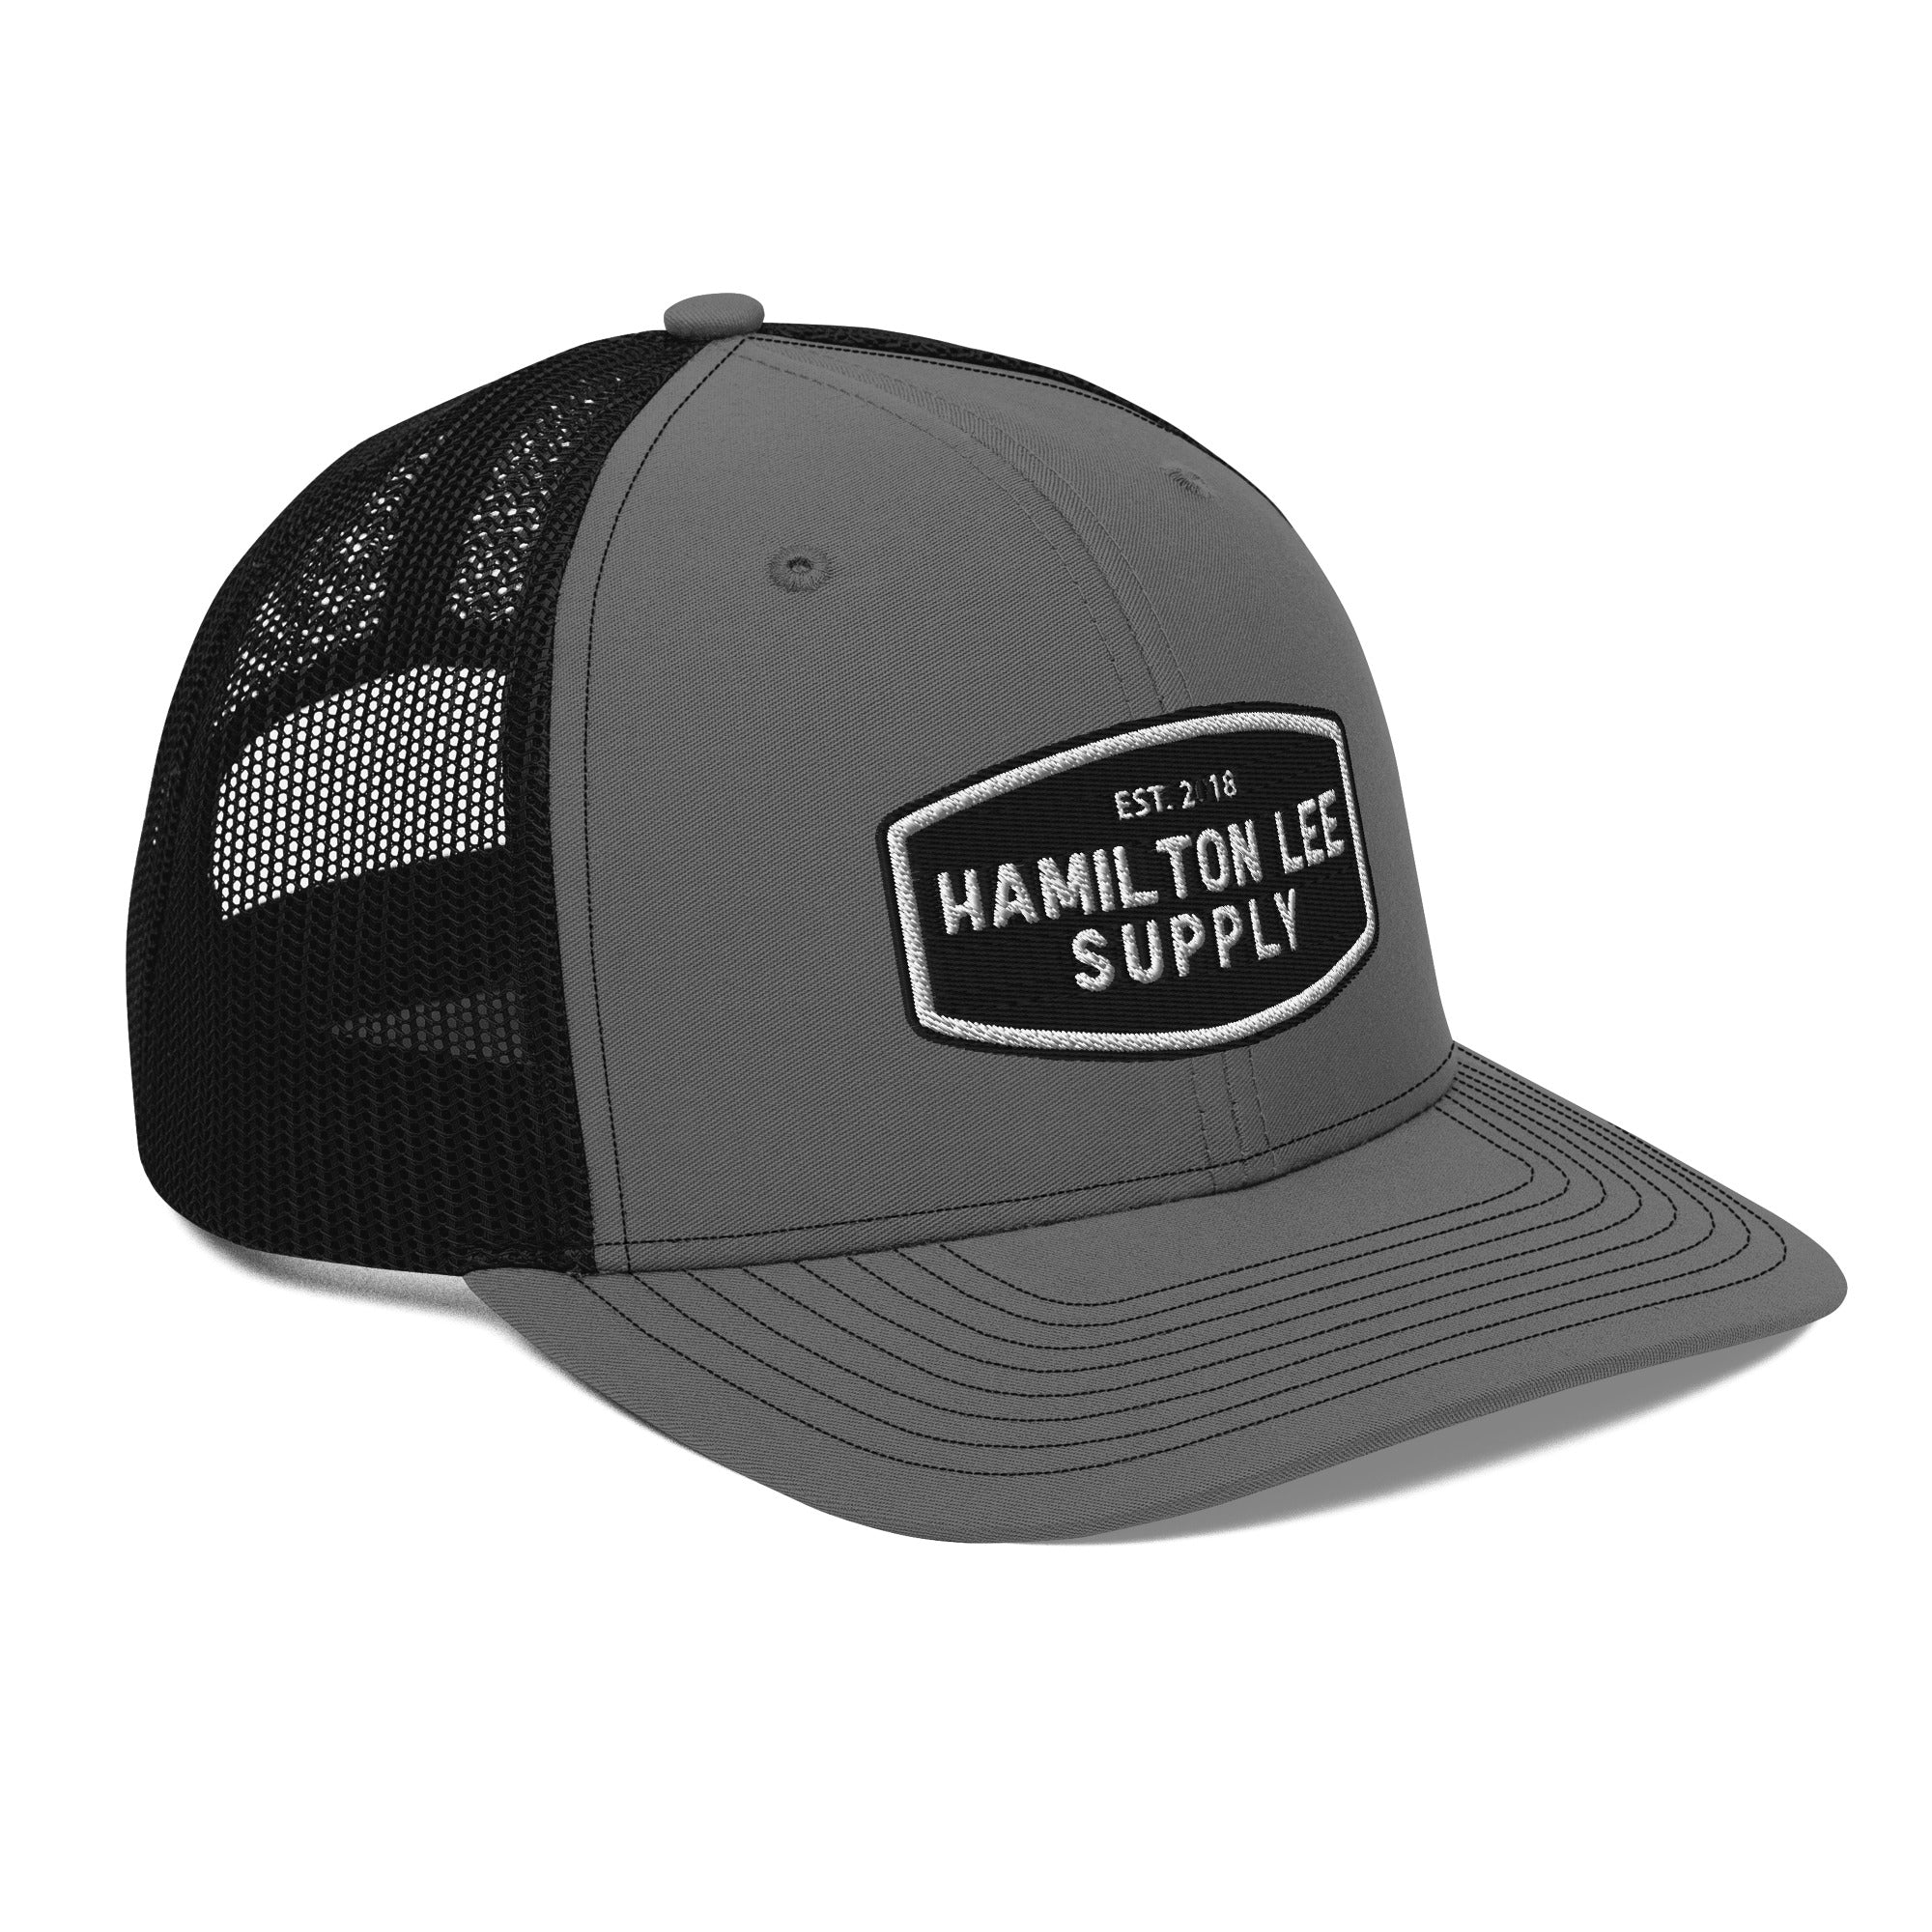 Hamilton Lee Supply | Trucker Cap | Trucker Hat | Hamilton Lee Supply